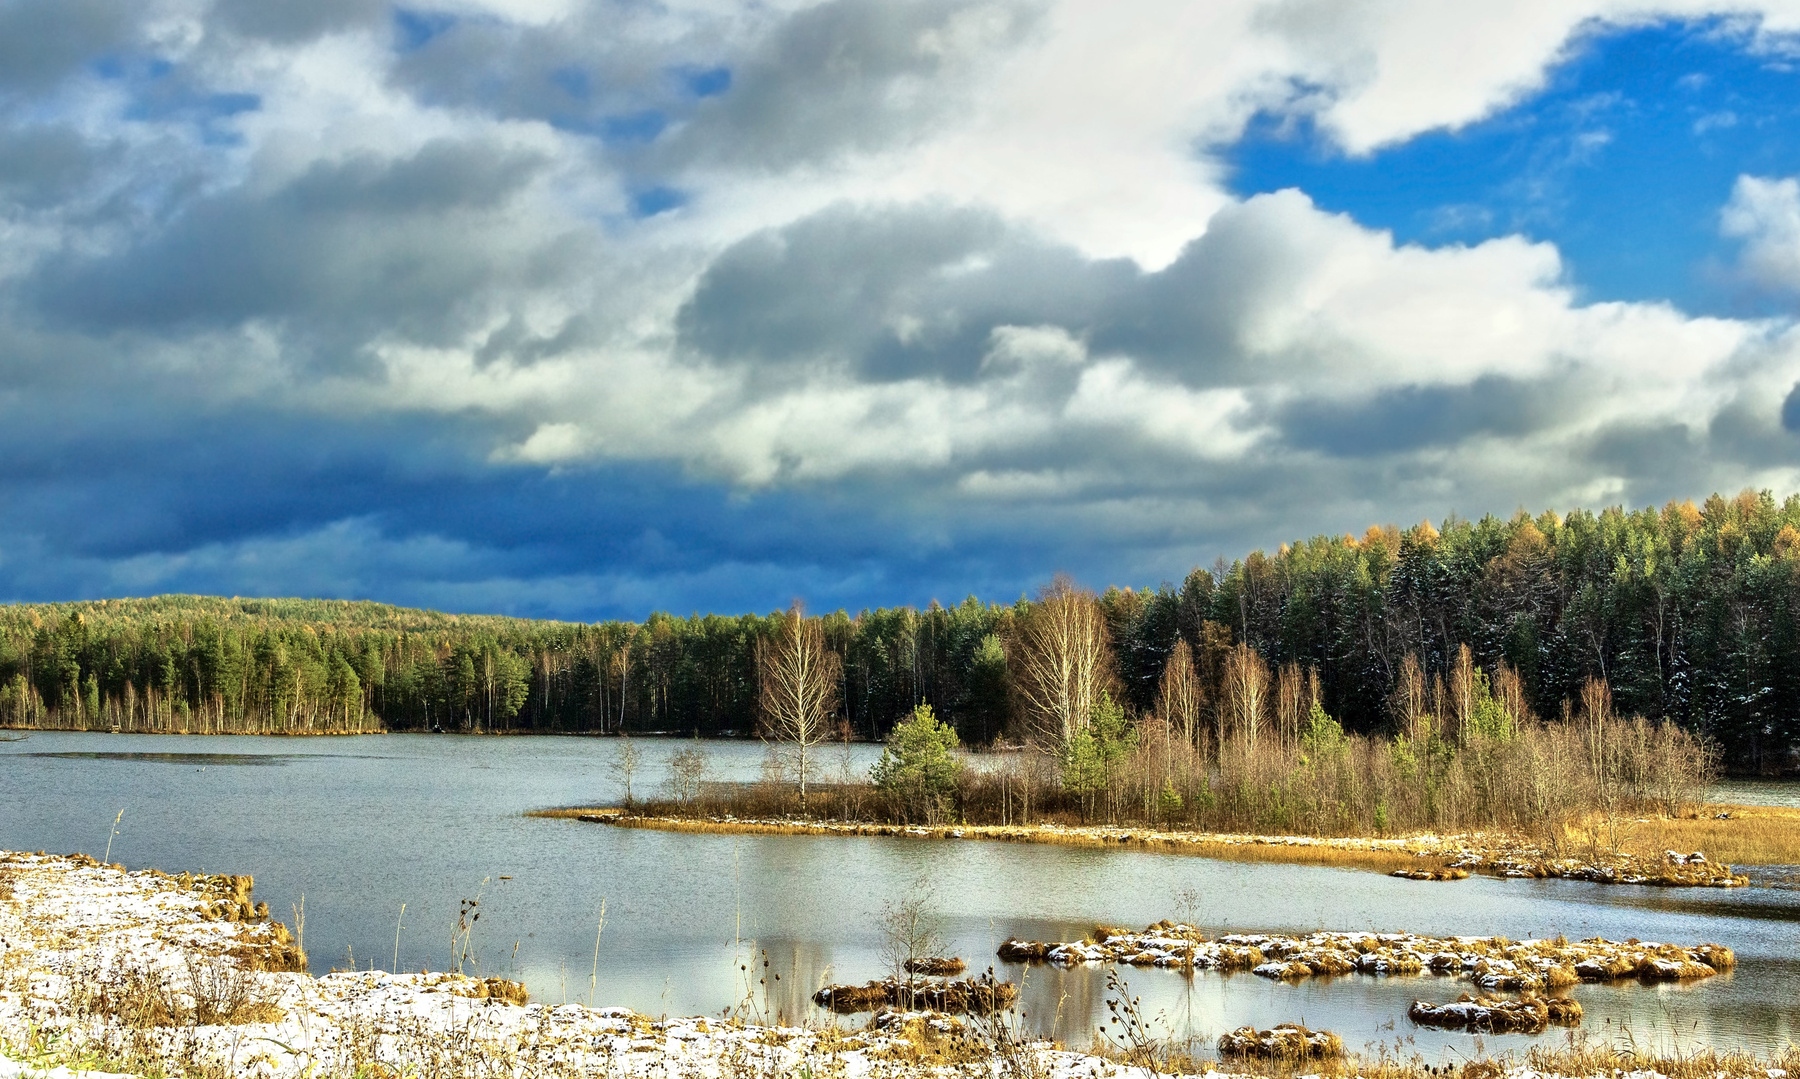 острова россия урал осень зима природа пейзаж снег река лес деревья перспектива вода пруд